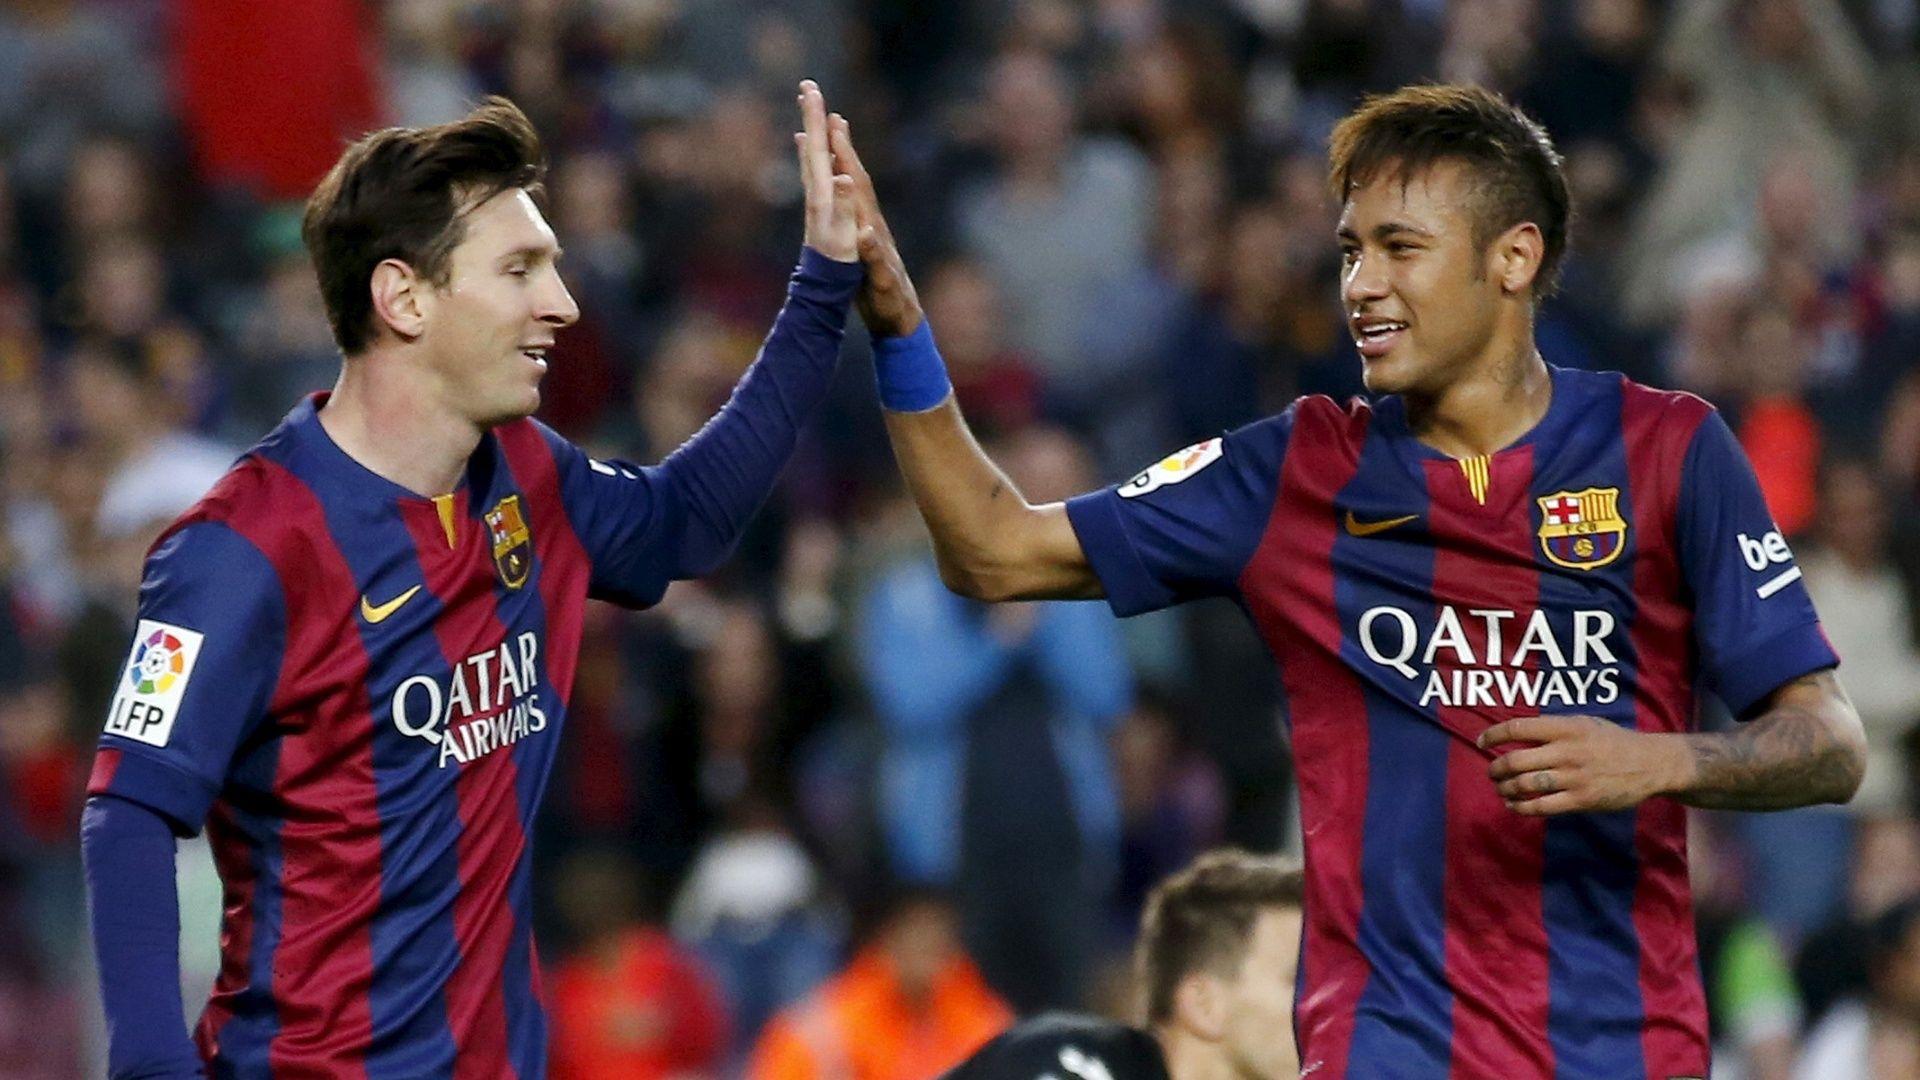 Barcelona Lionel Messi E Neymar Wallpaper: Players, Teams, Leagues